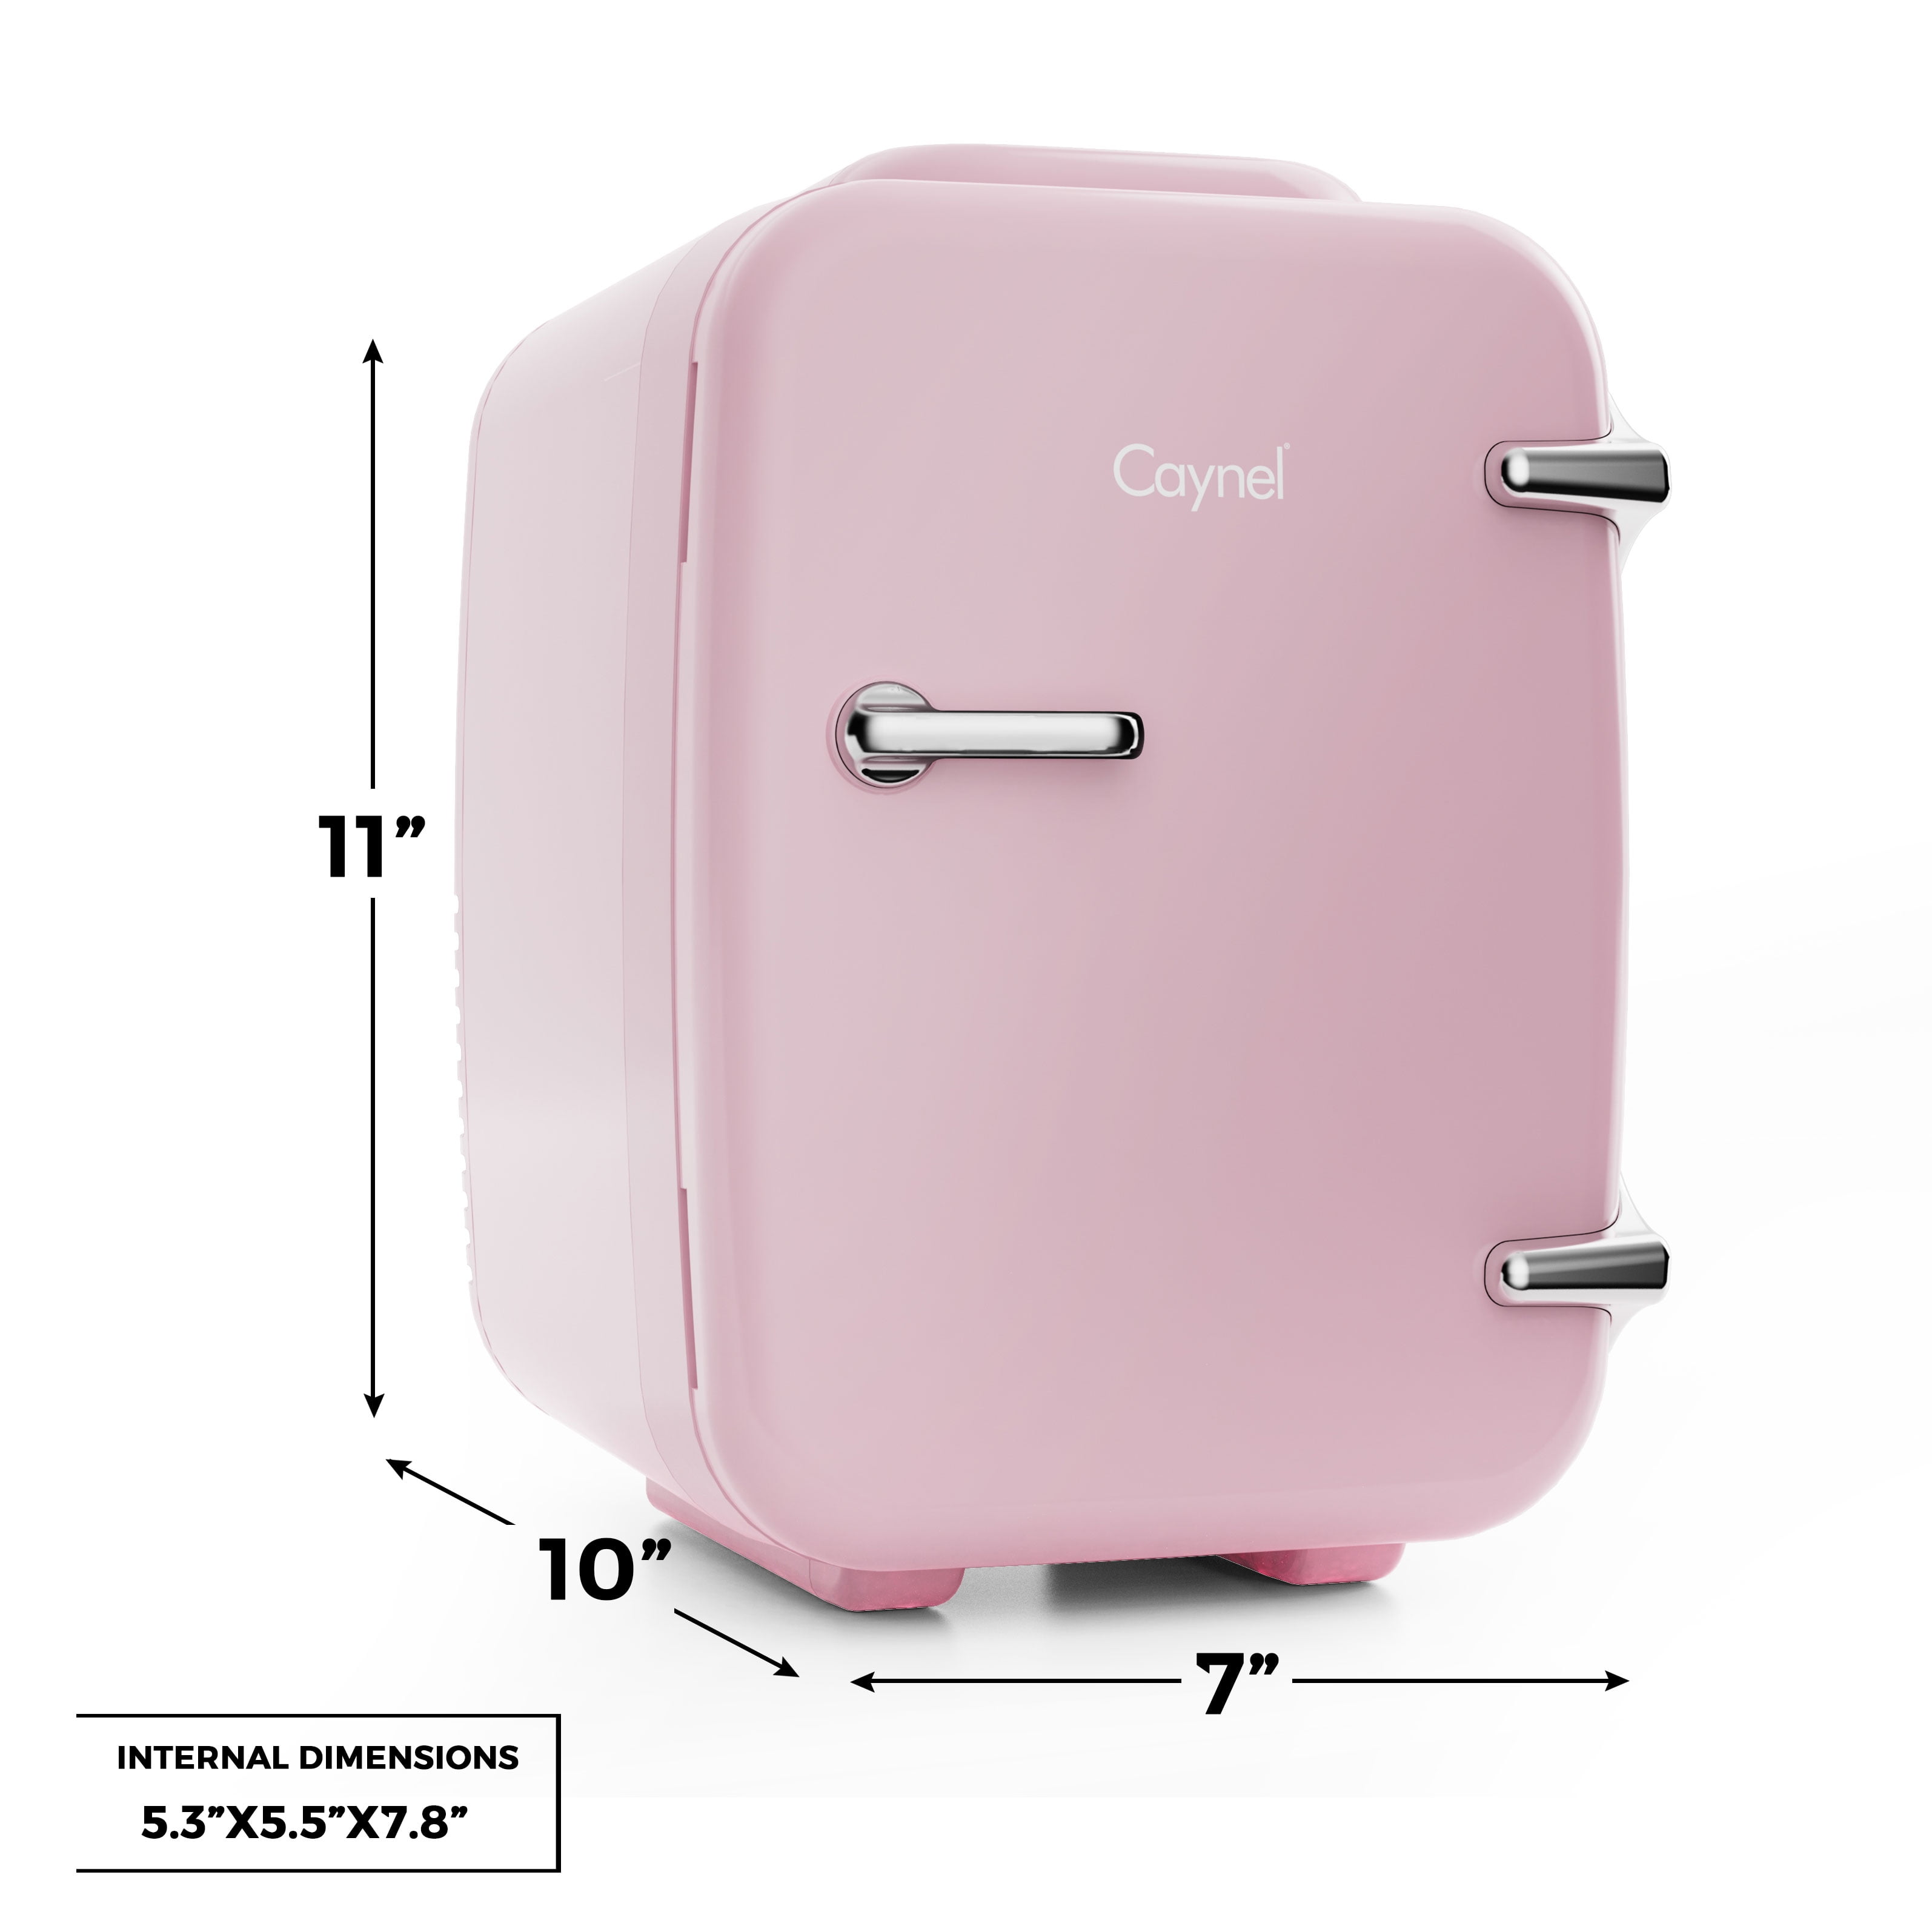 Cooluli CMF6P Electric 4-Liter Portable Cooler/Warmer Mini Fridge, Pink